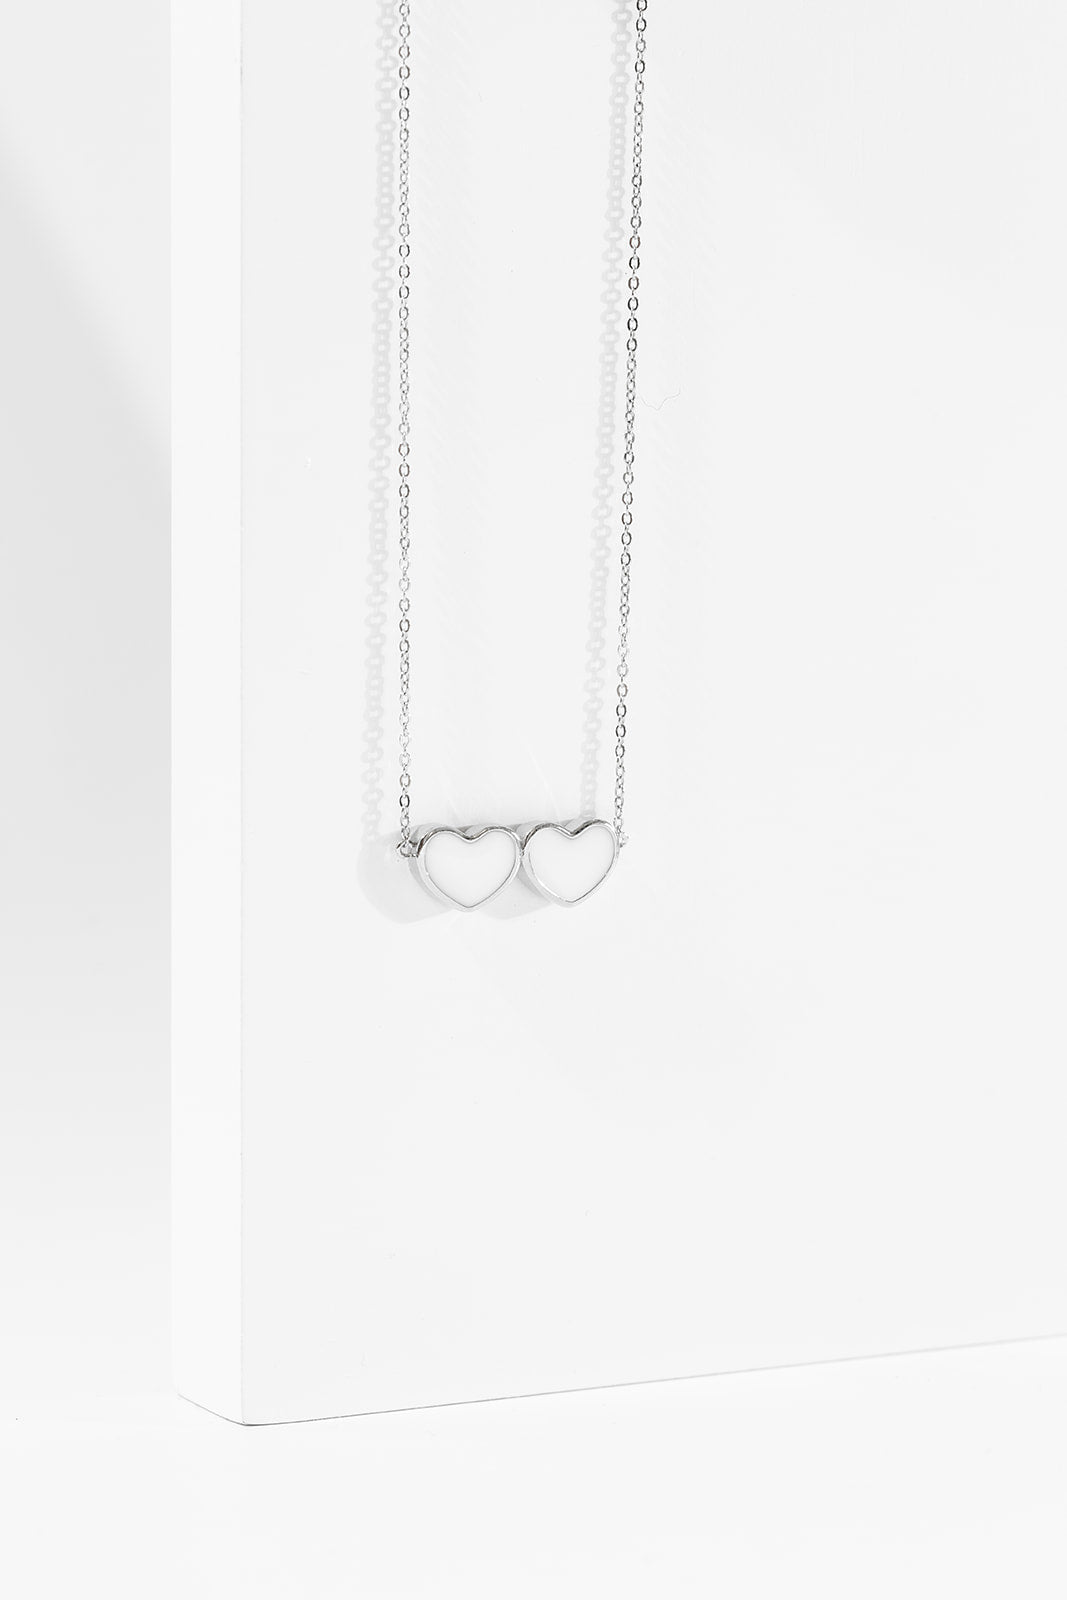 Heart strings necklace - Platinum